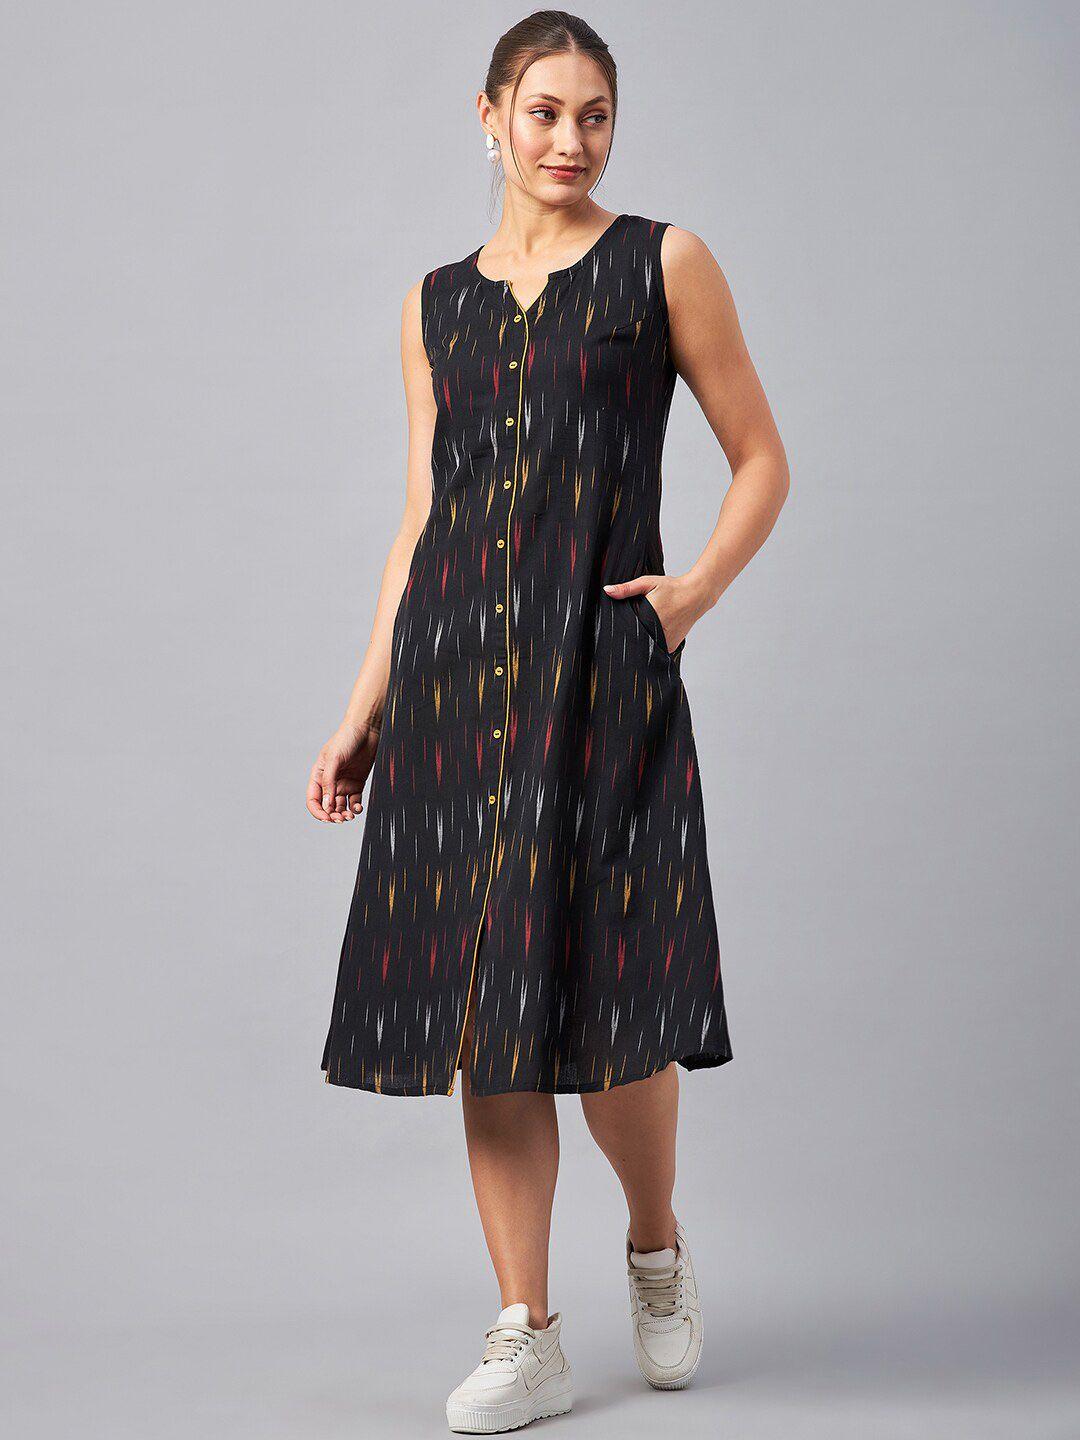 azira self design sleeveless cotton a-line ethnic dress